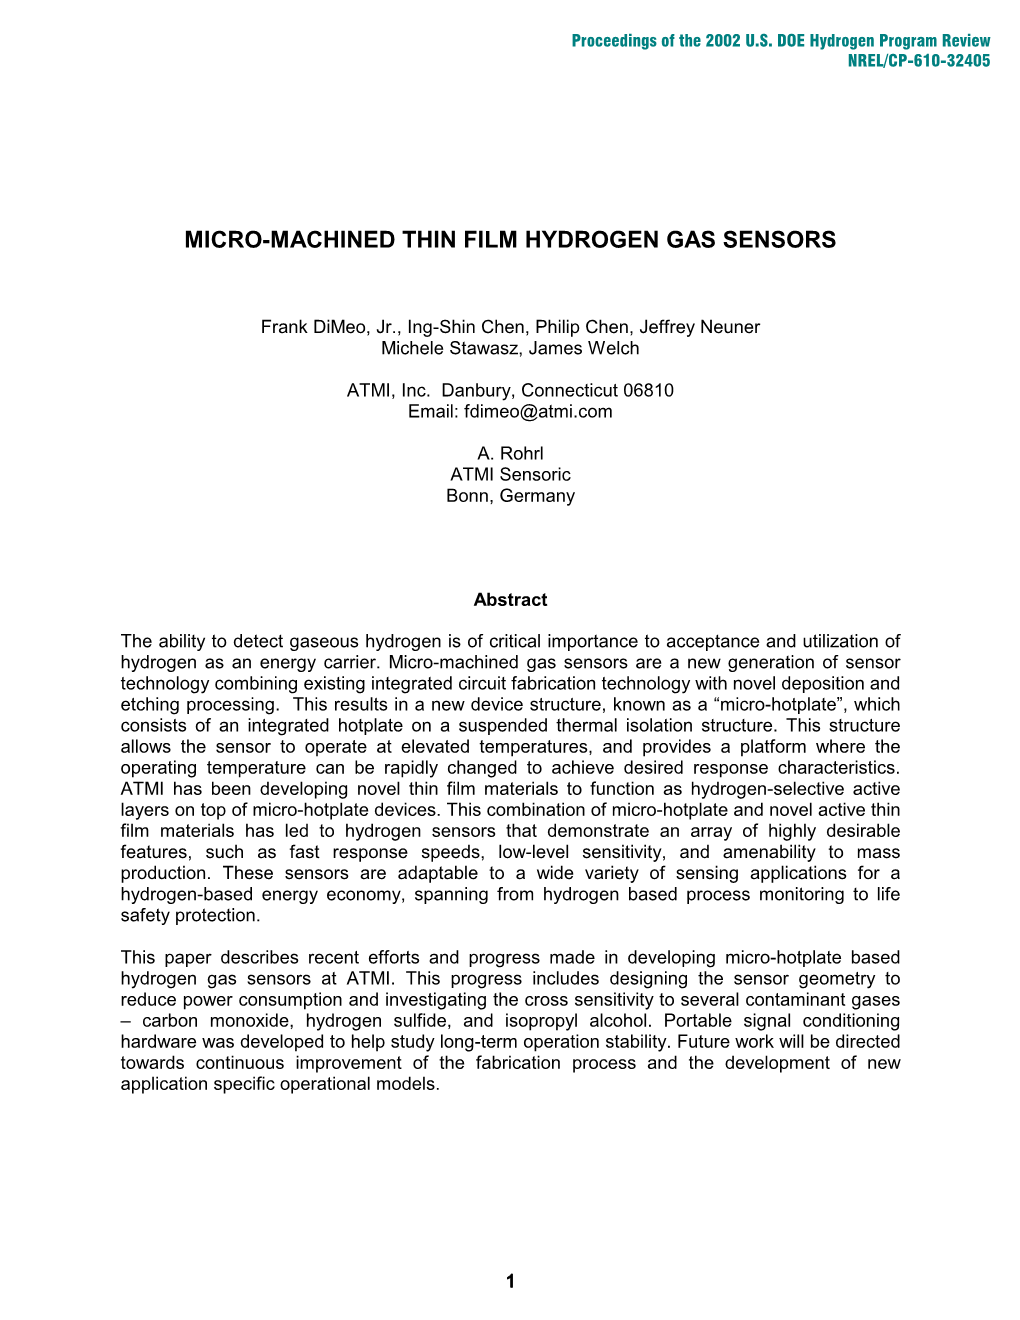 Micro-Machined Thin Film Hydrogen Gas Sensors